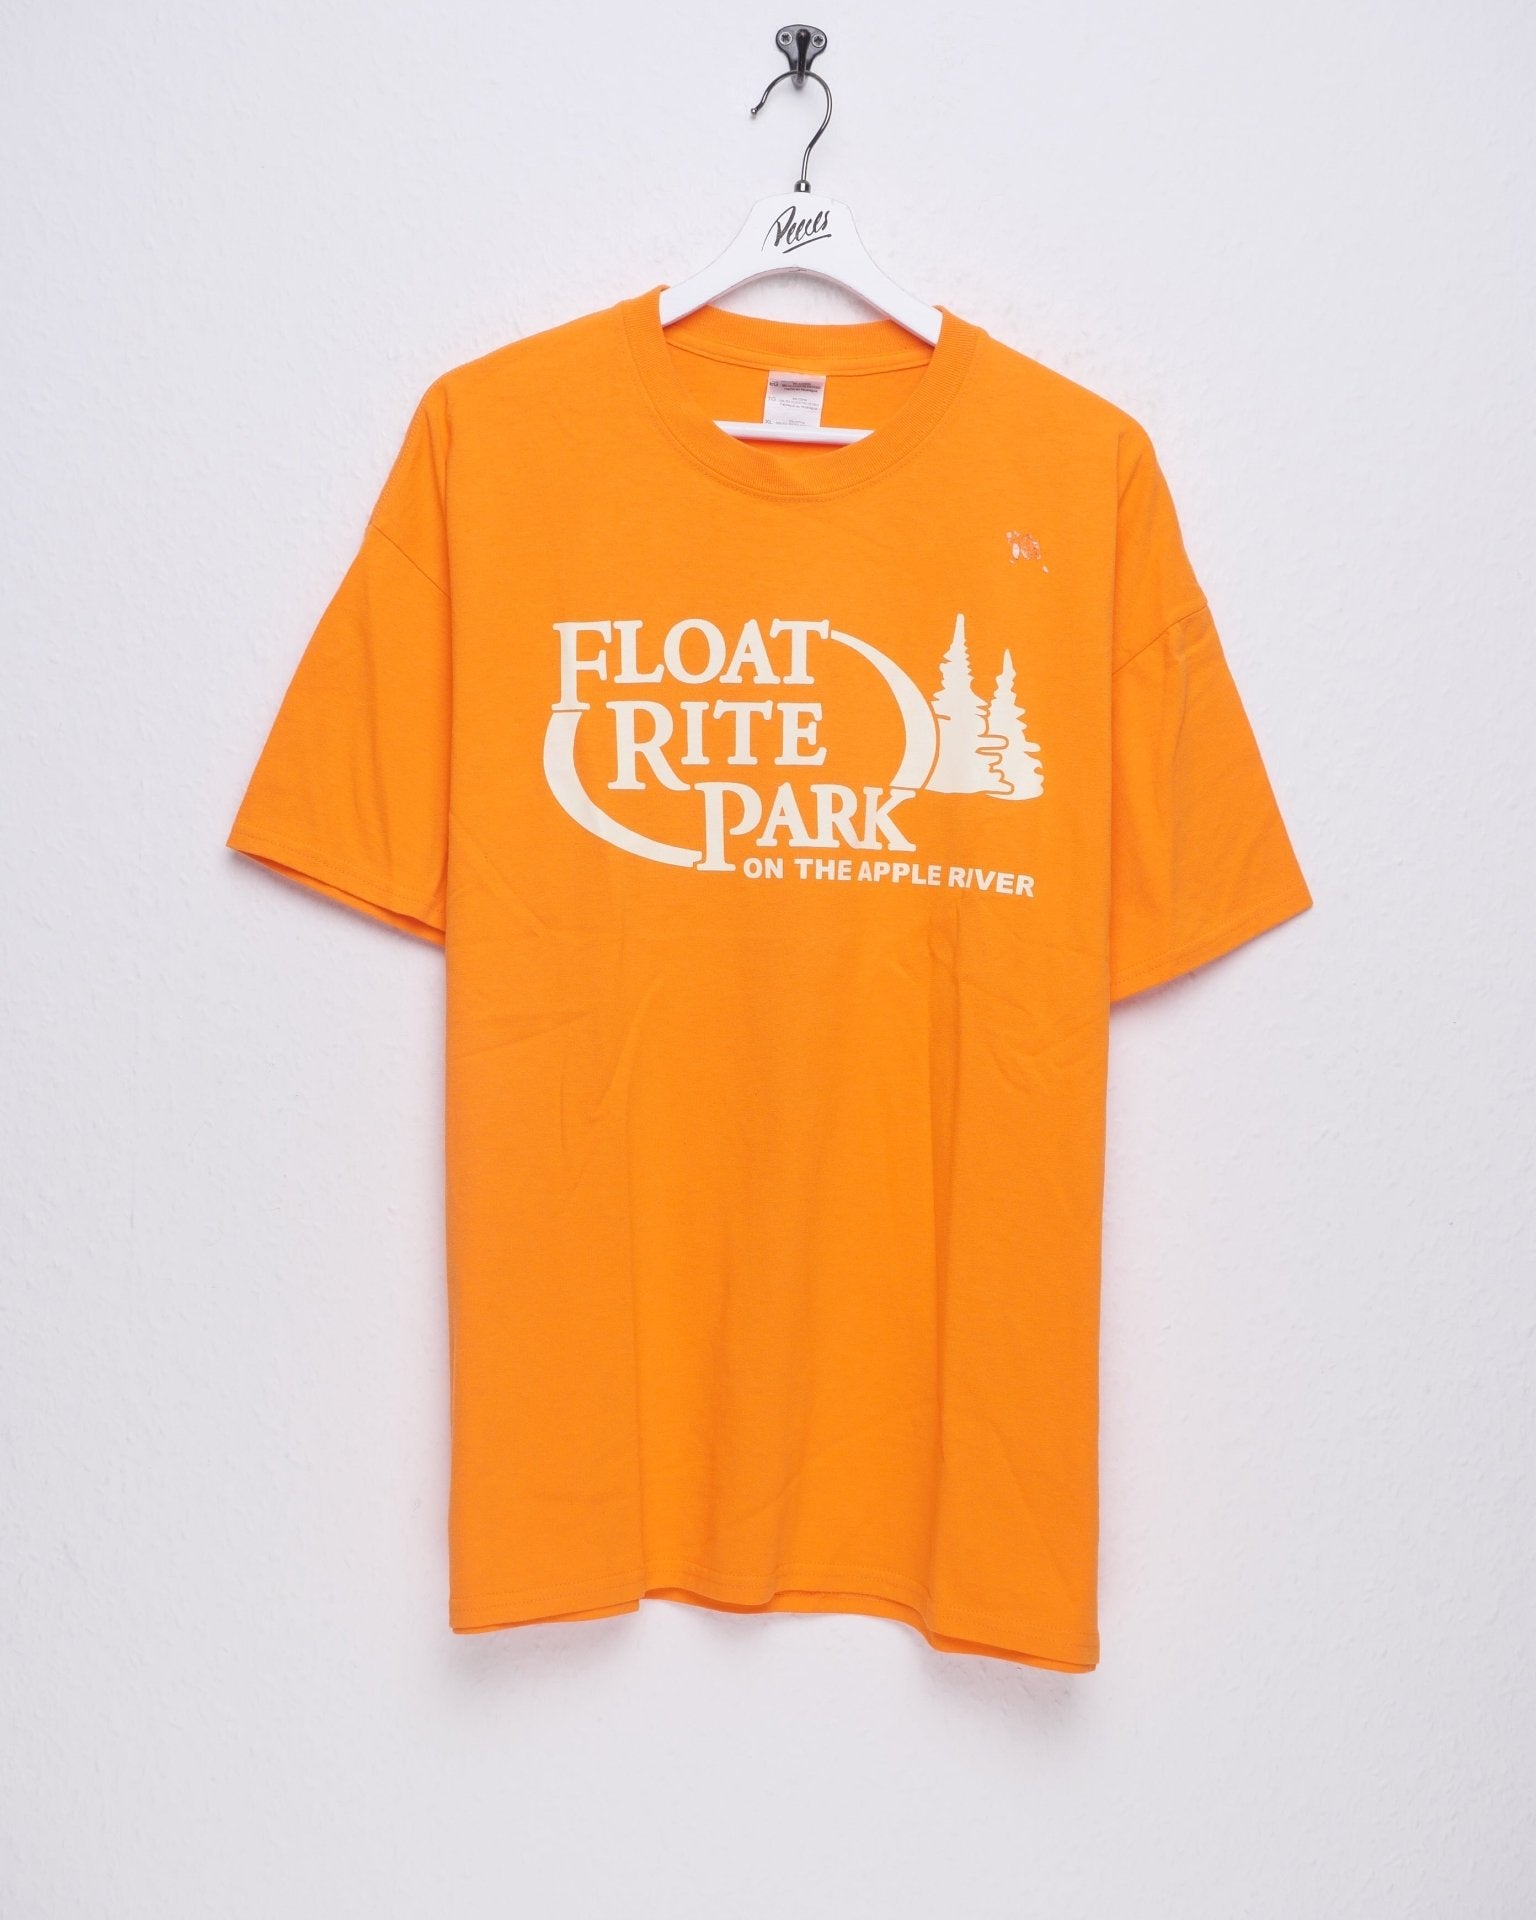 Float Rite Park printed Graphic Vintage Shirt - Peeces